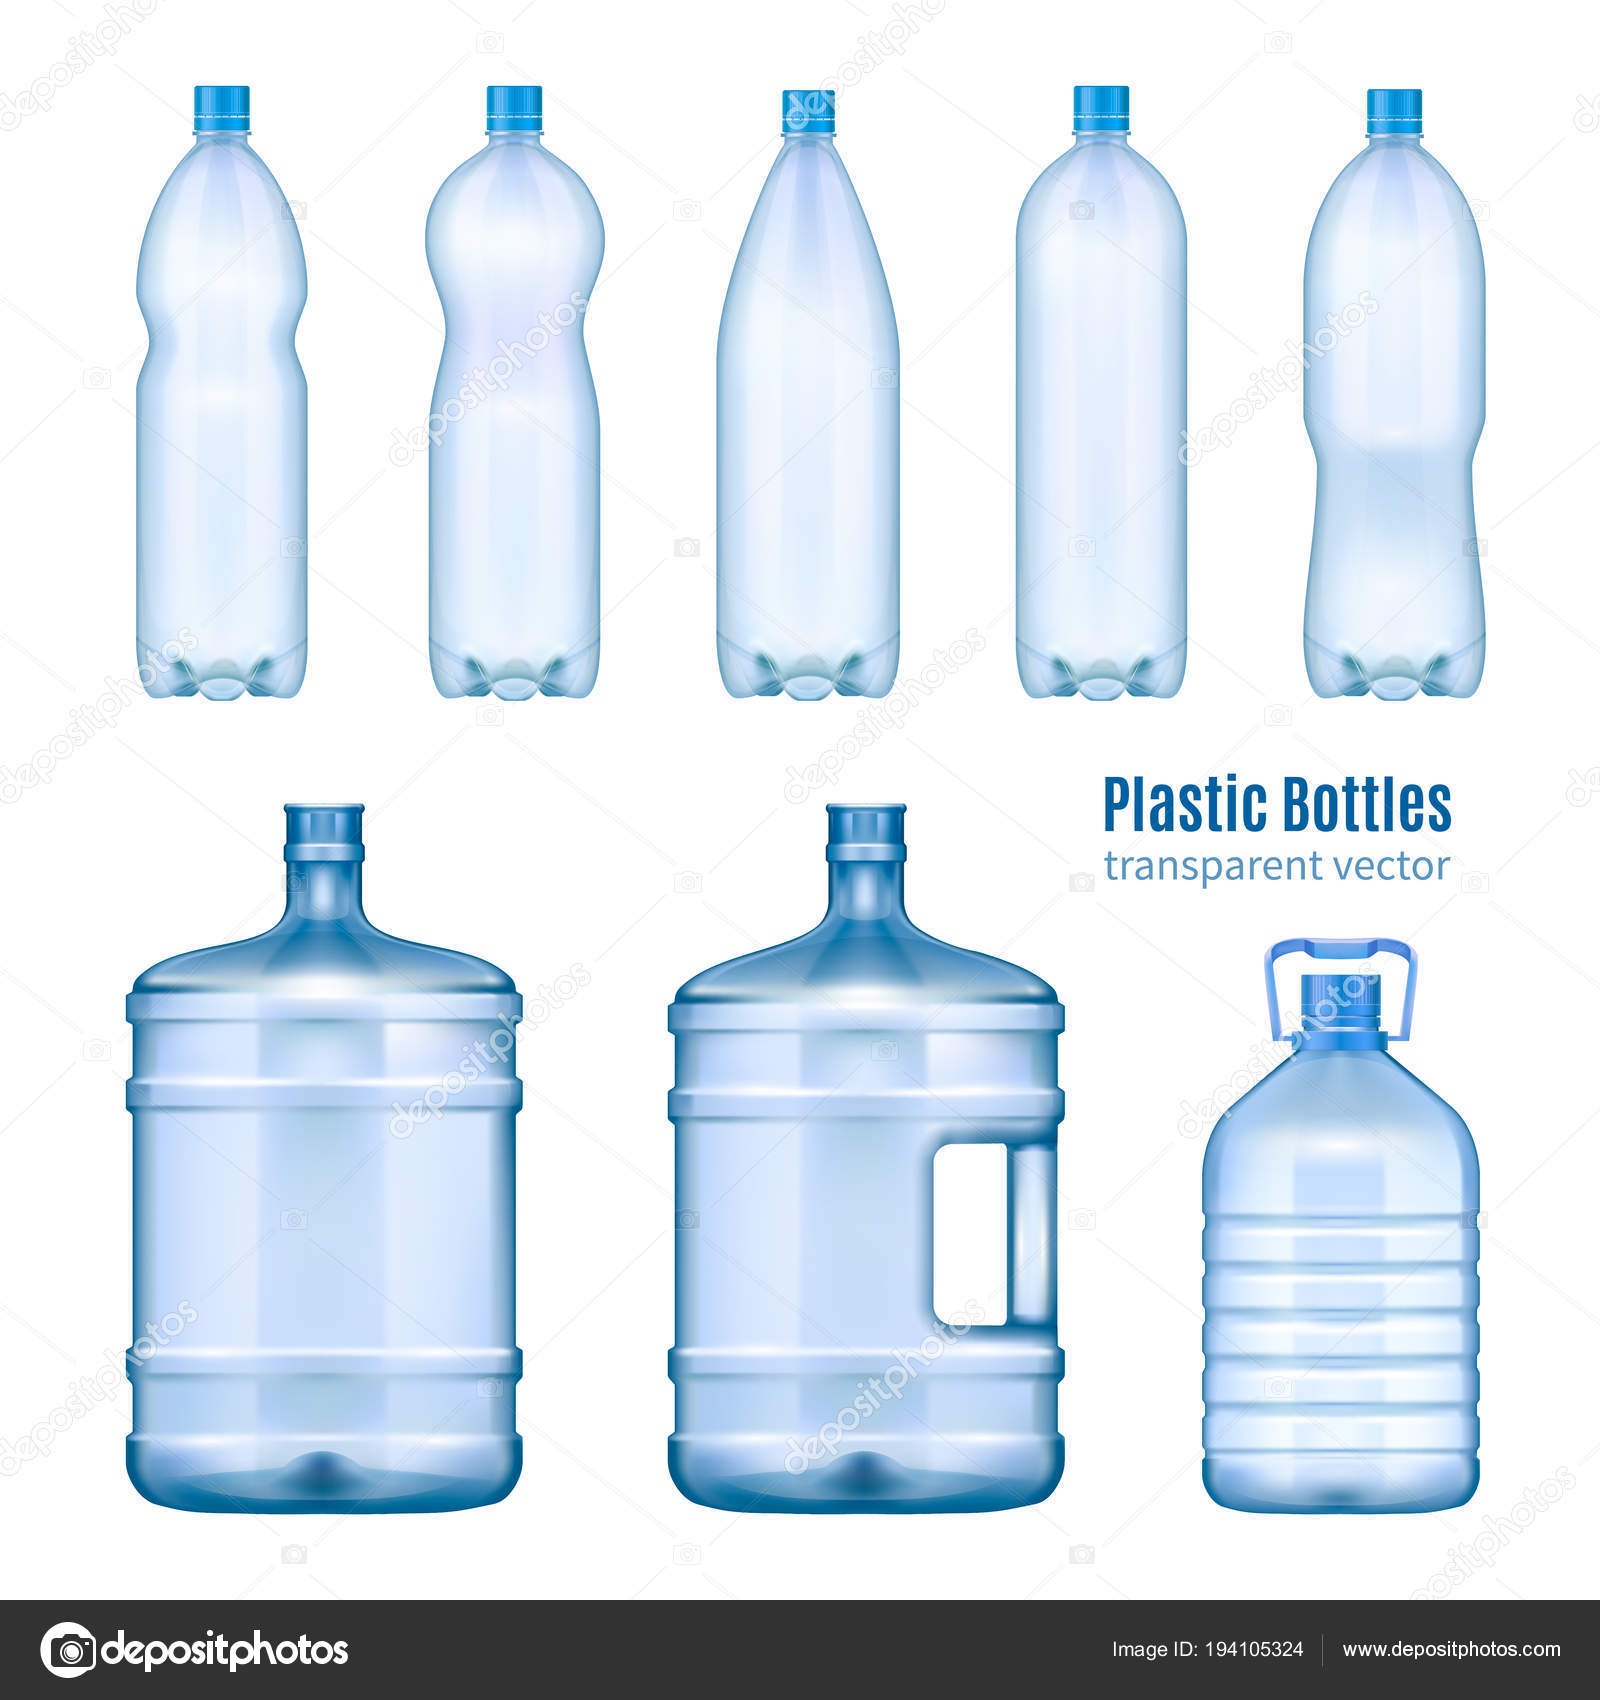 https://st3.depositphotos.com/2885805/19410/v/1600/depositphotos_194105324-stock-illustration-plastic-water-bottles-realistic-set.jpg